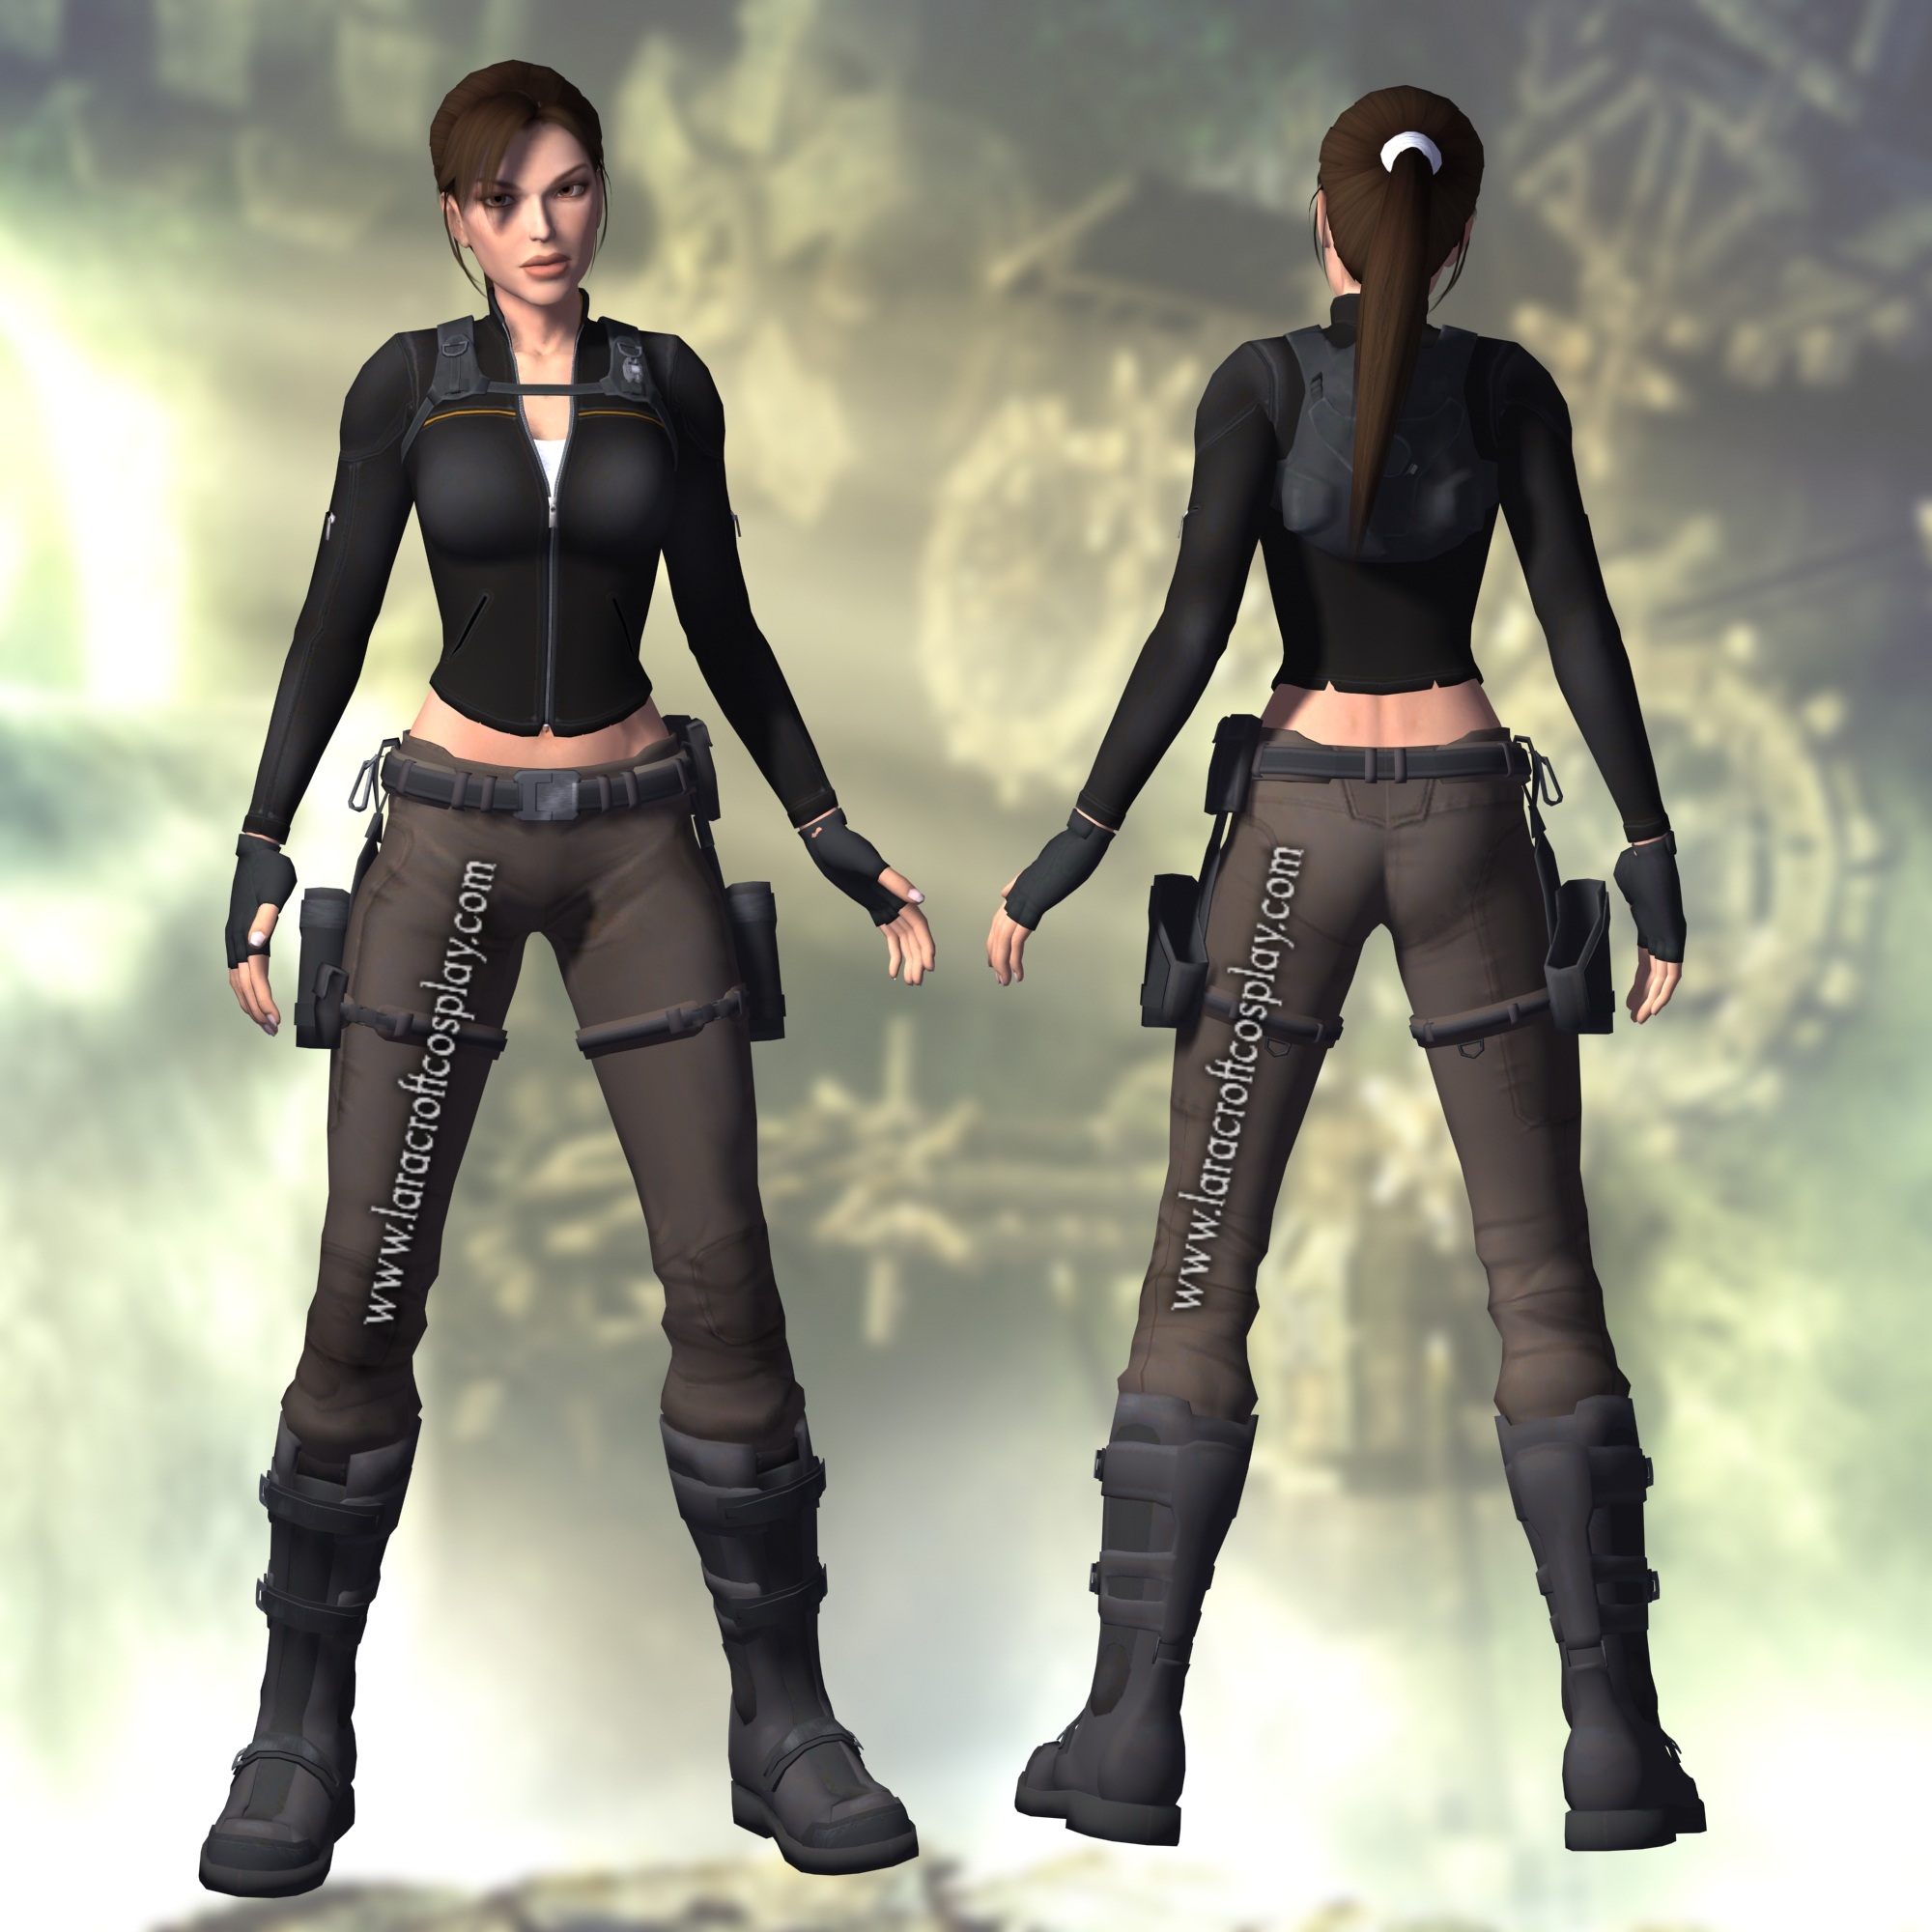 Skin colors for Lara Mod - Lara Croft and the Guardian 